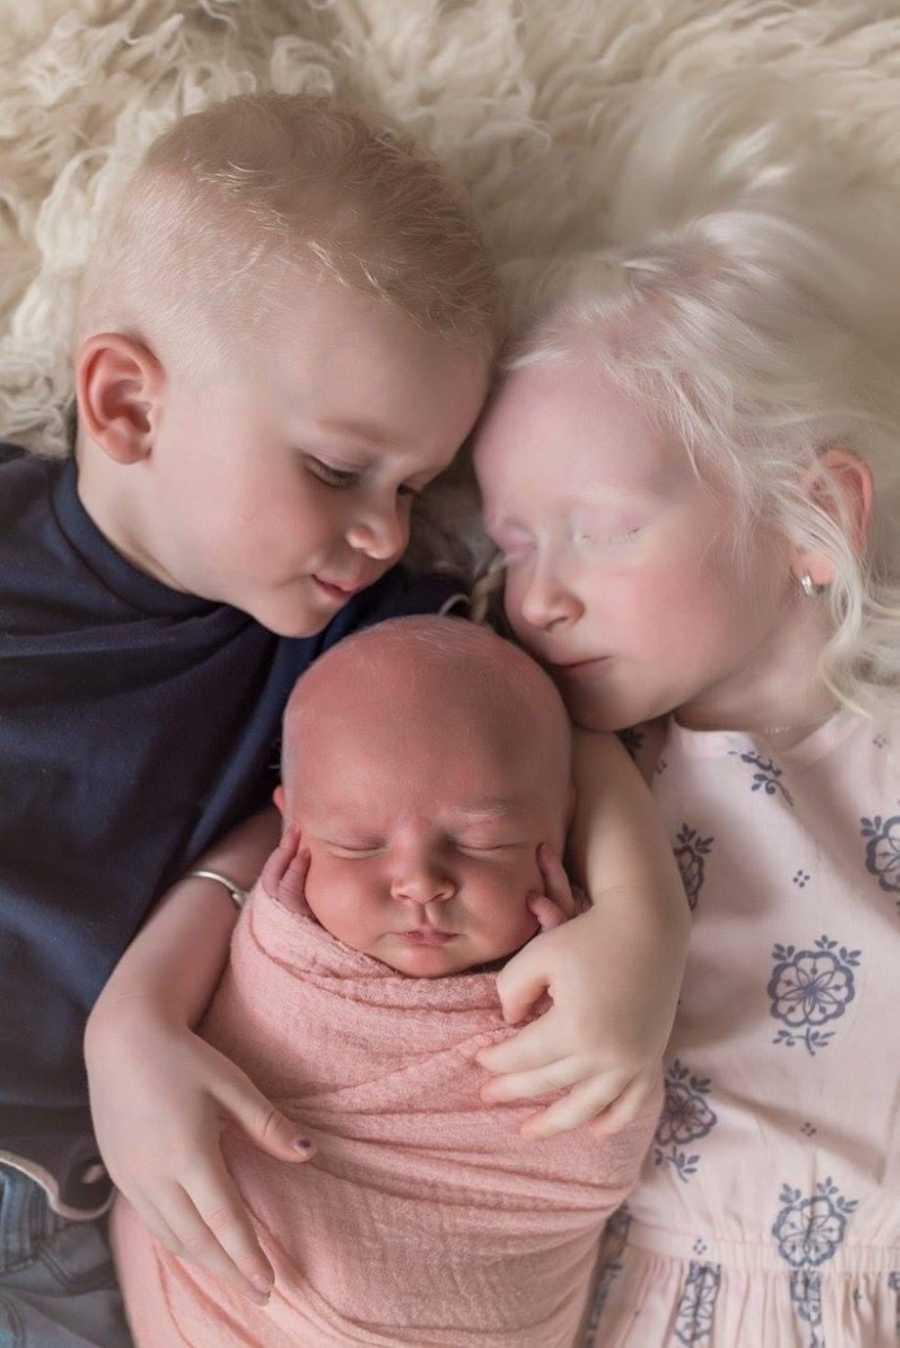 (Courtesy of <a href="https://albinismwarriors.com.au/">Hailey Brown</a>)